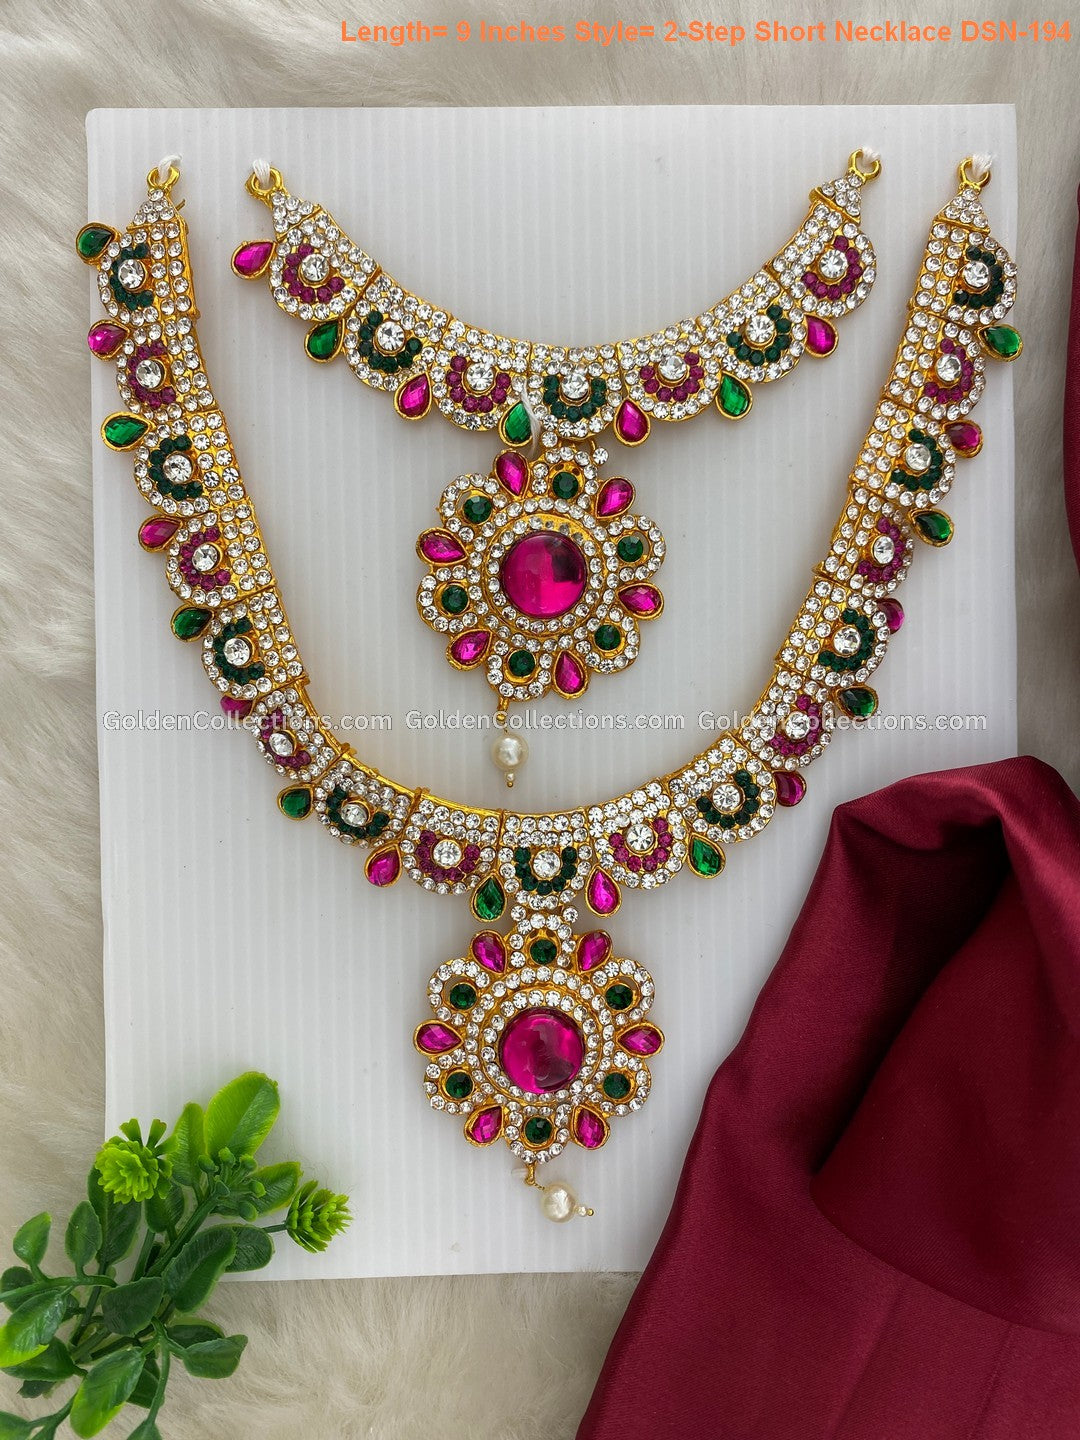 Deity Short Haram - Hindu Goddess Jewellery - Buy Now - DSN-194